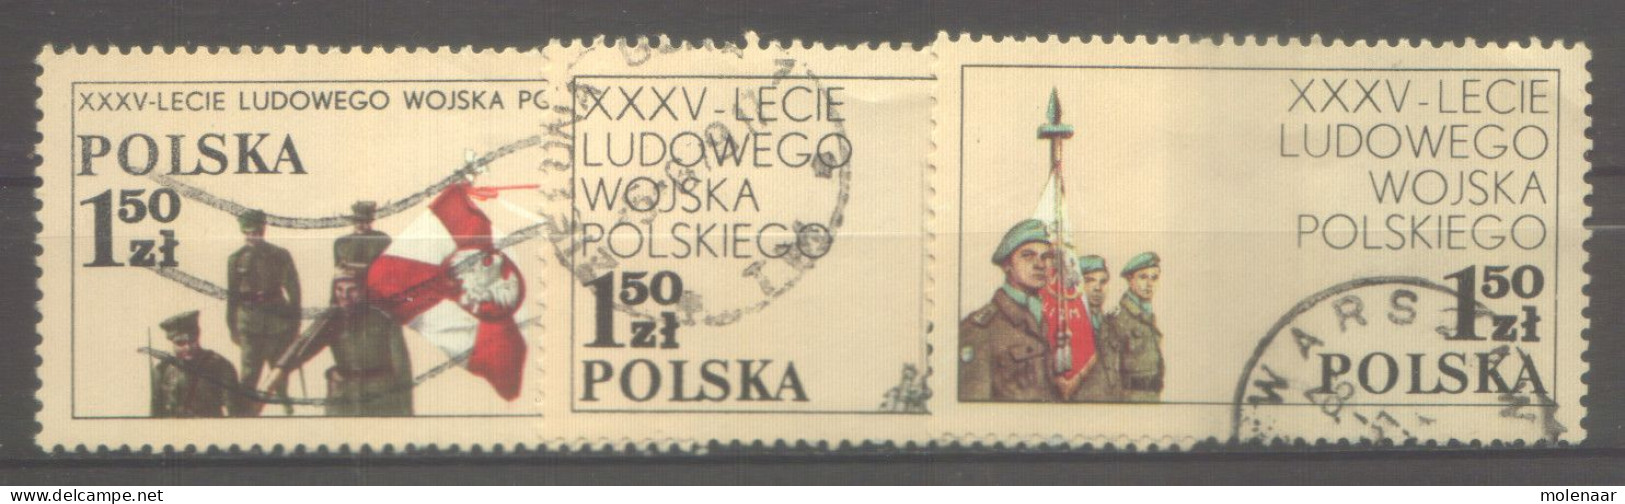 Postzegels > Europa > Polen > 1944-.... Republiek > 1971-80 > Gebruikt No. 2579-2581  (12158) - Gebraucht